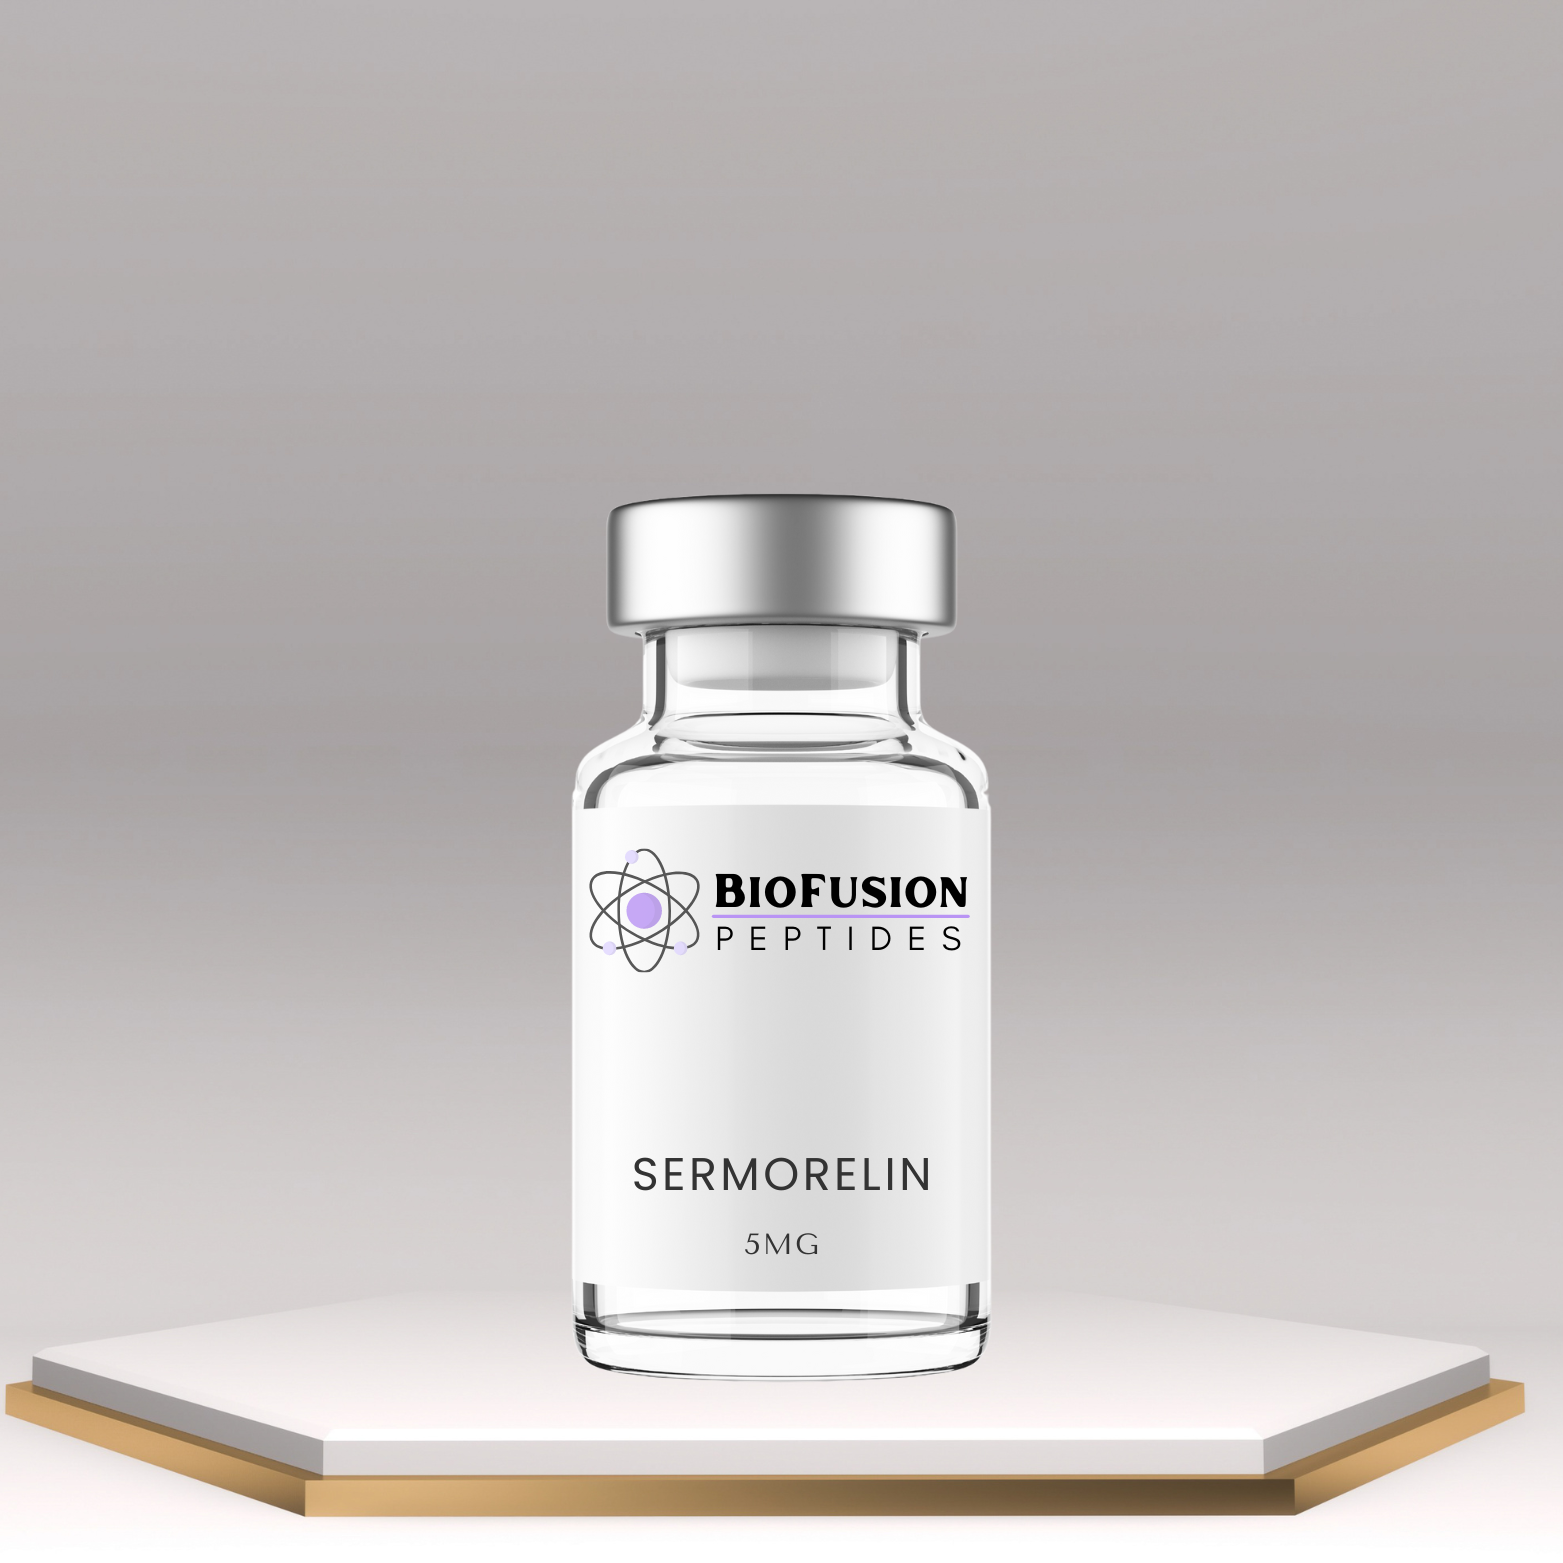 BioFusion Peptides Sermorelin (5MG) vial